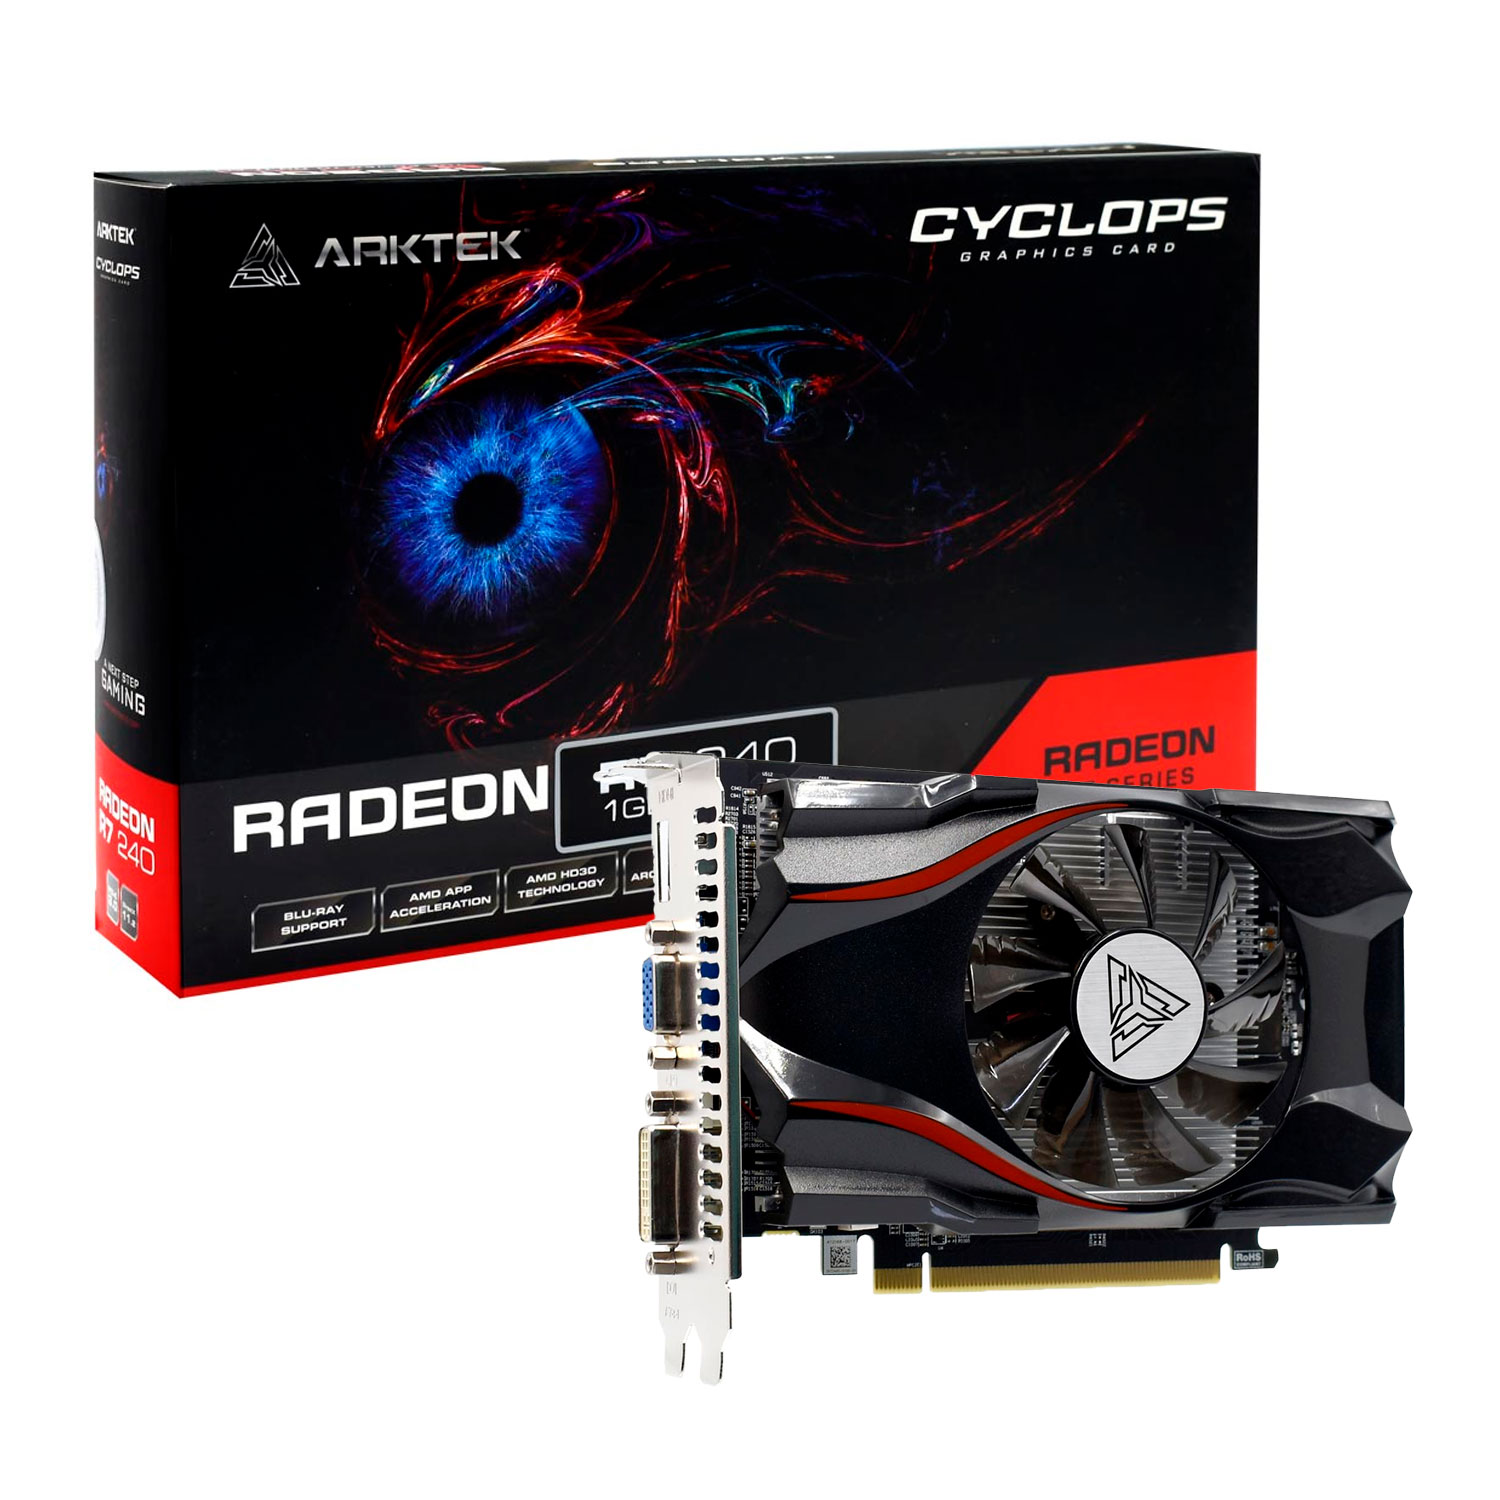 Placa de Vídeo Artek AMD Radeon R7-240 1GB GDDR5 - AKR240D5S1GH1